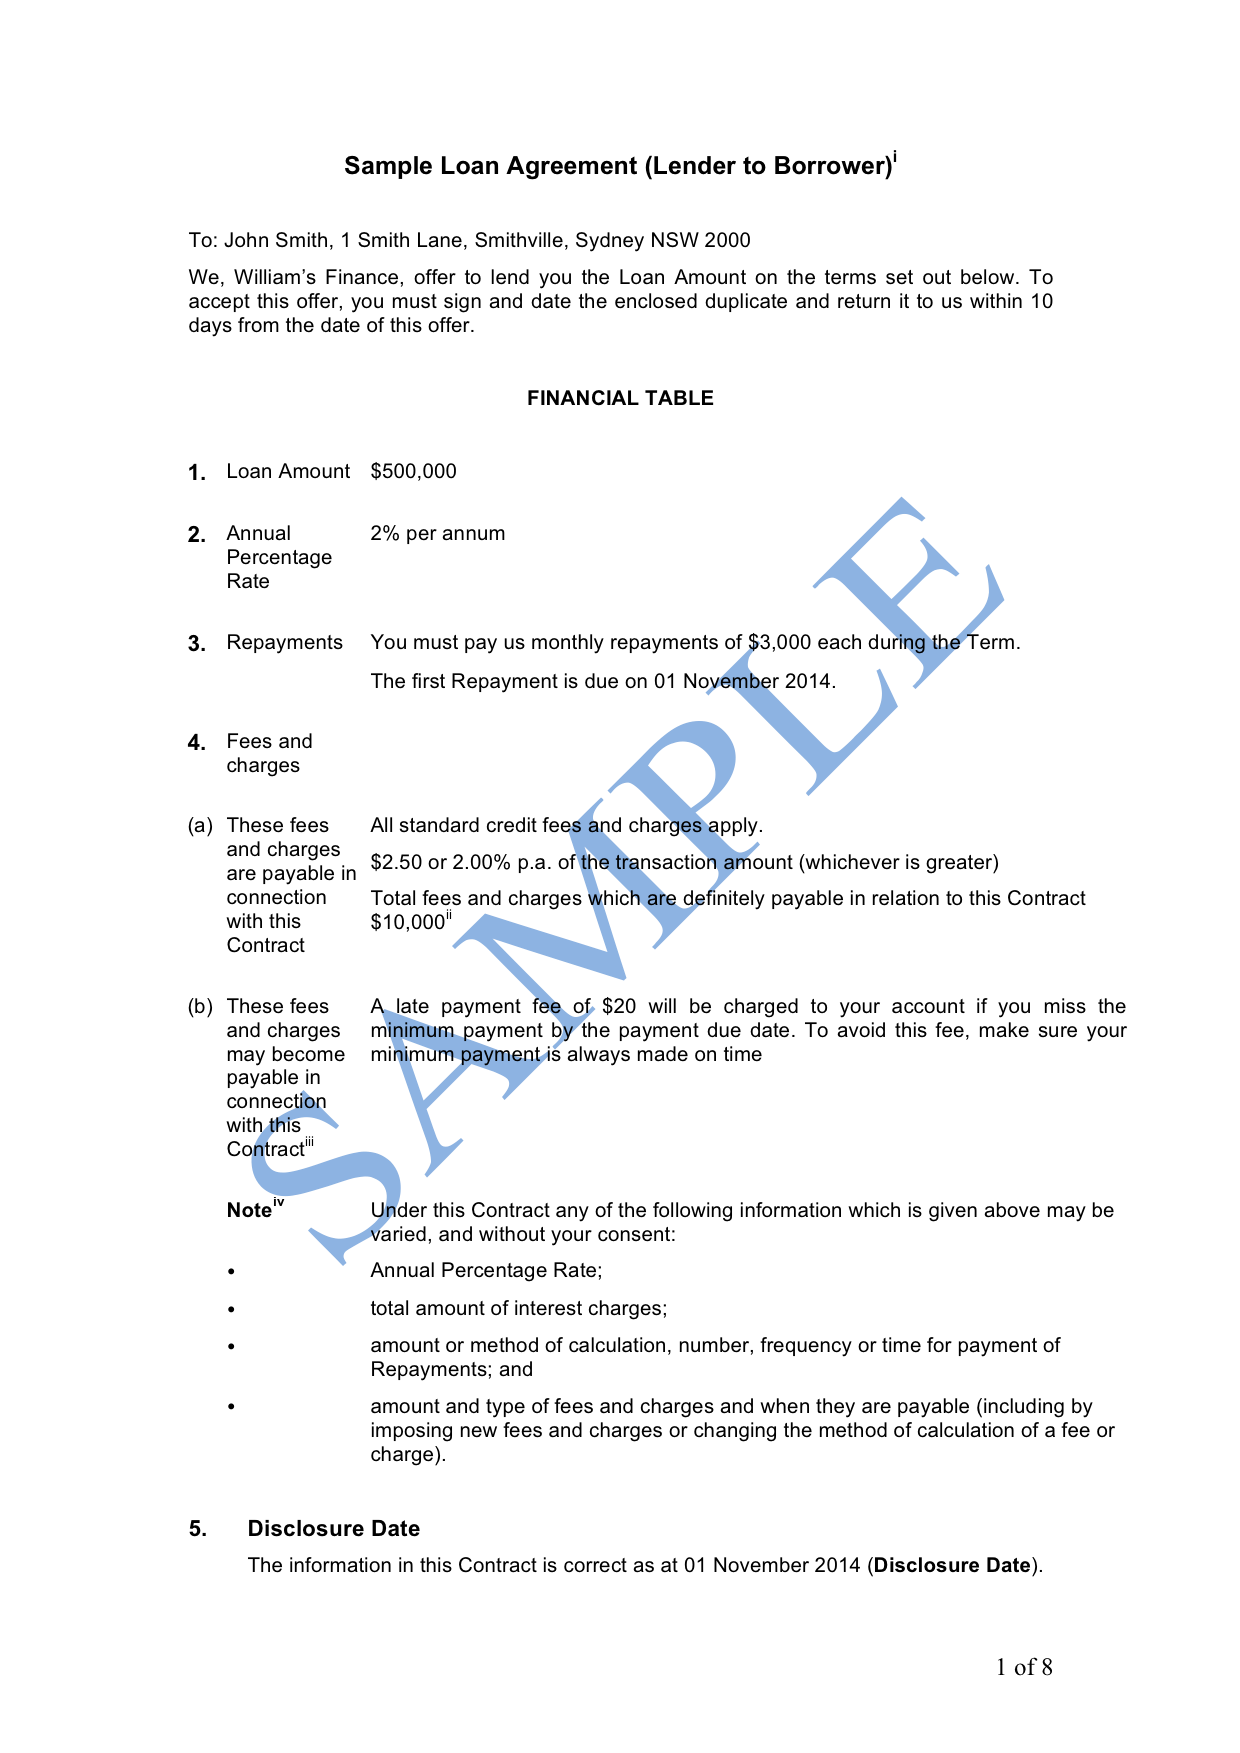 Loan Agreement (Lender to Borrower) Sample LawPath